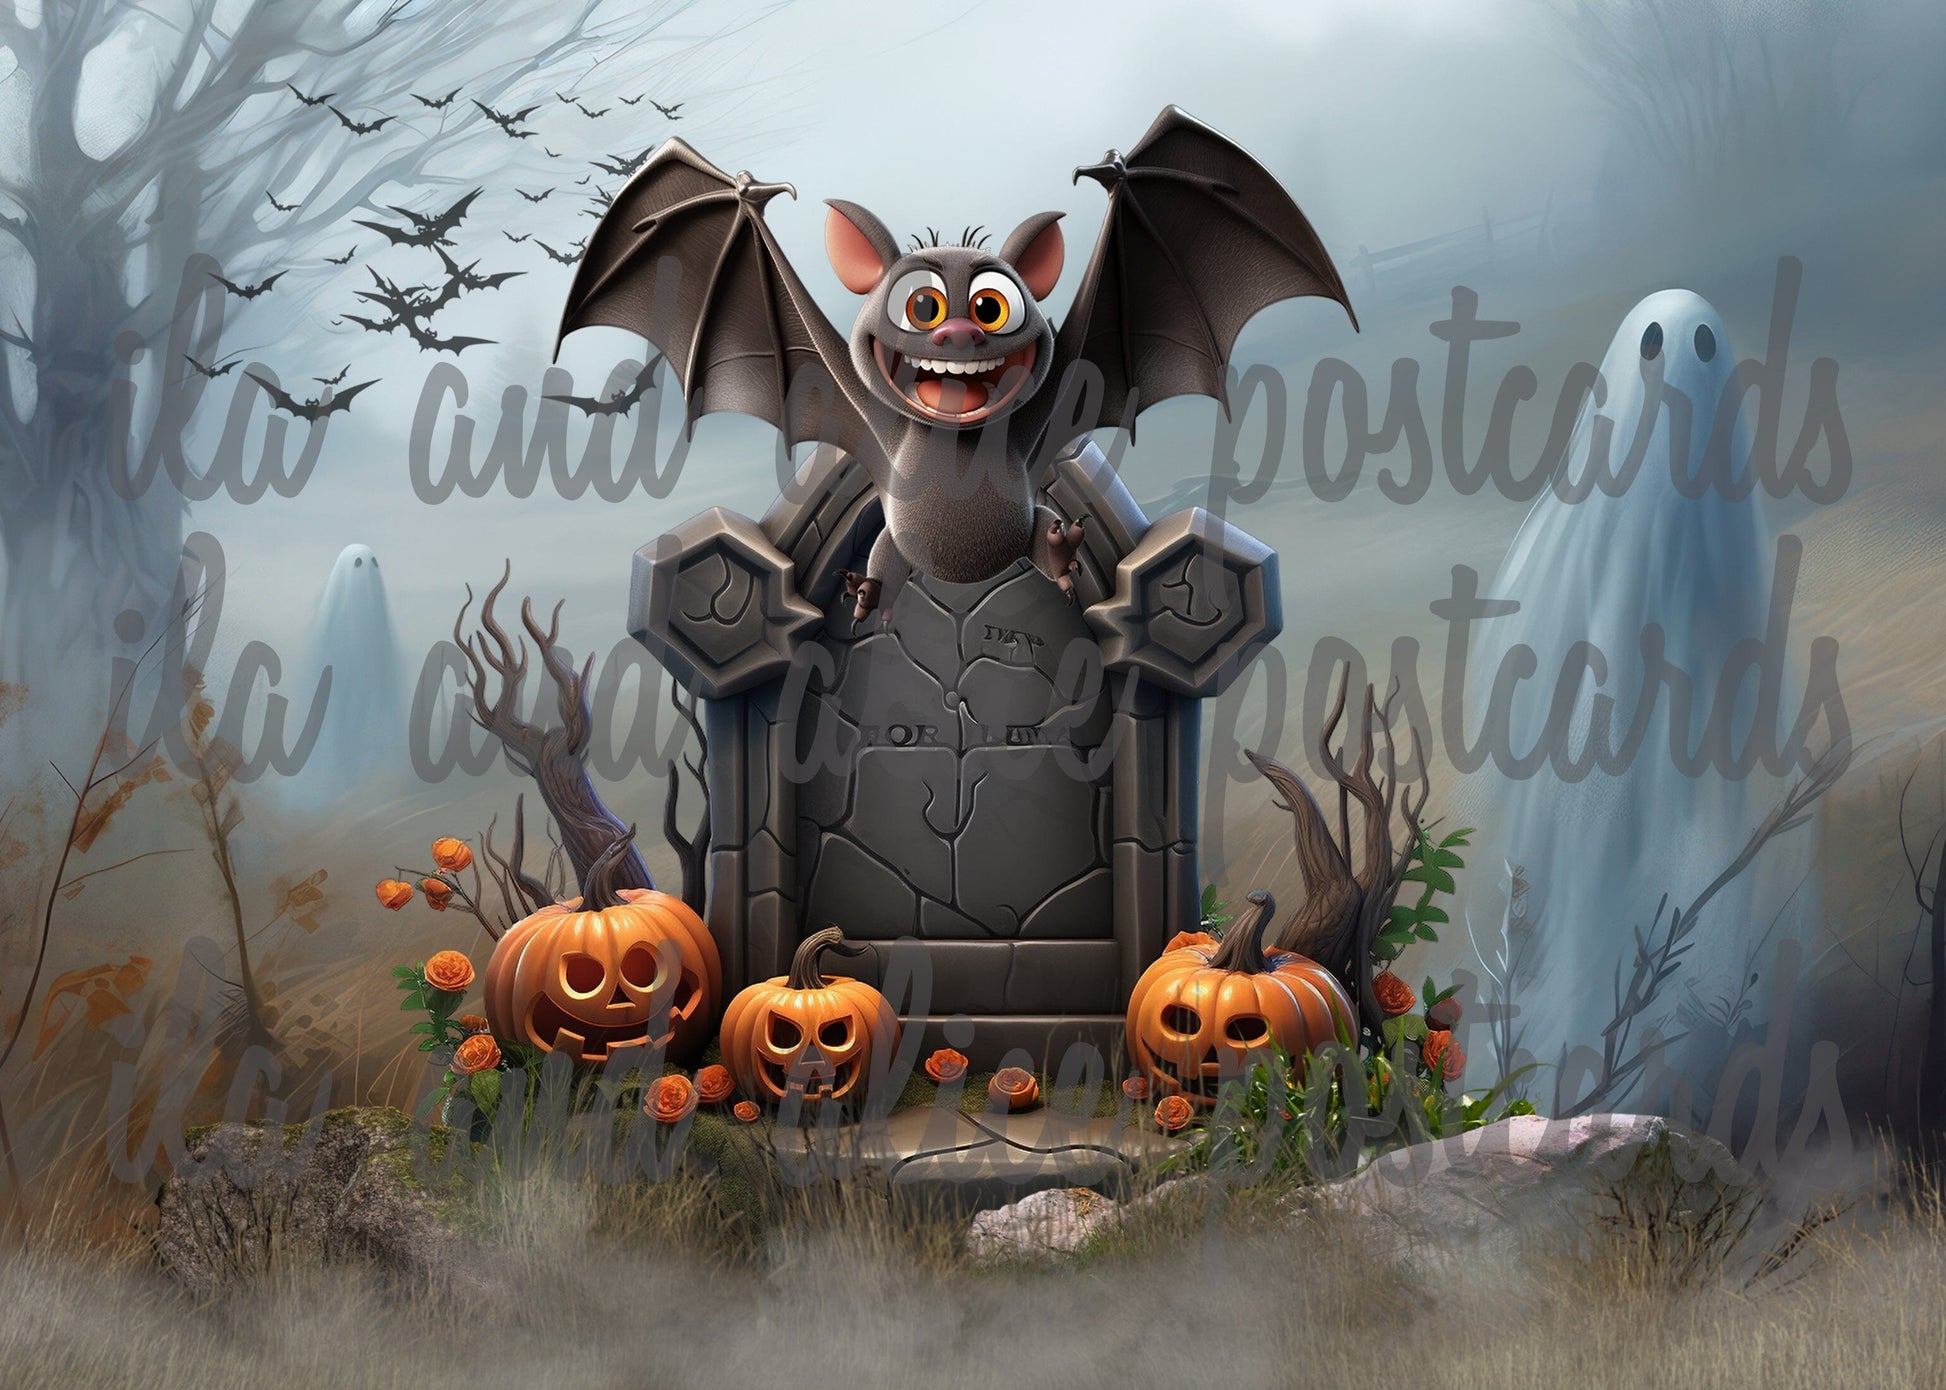 Dark Forest Cuties Halloween Postcards Post Cards ila & alice 